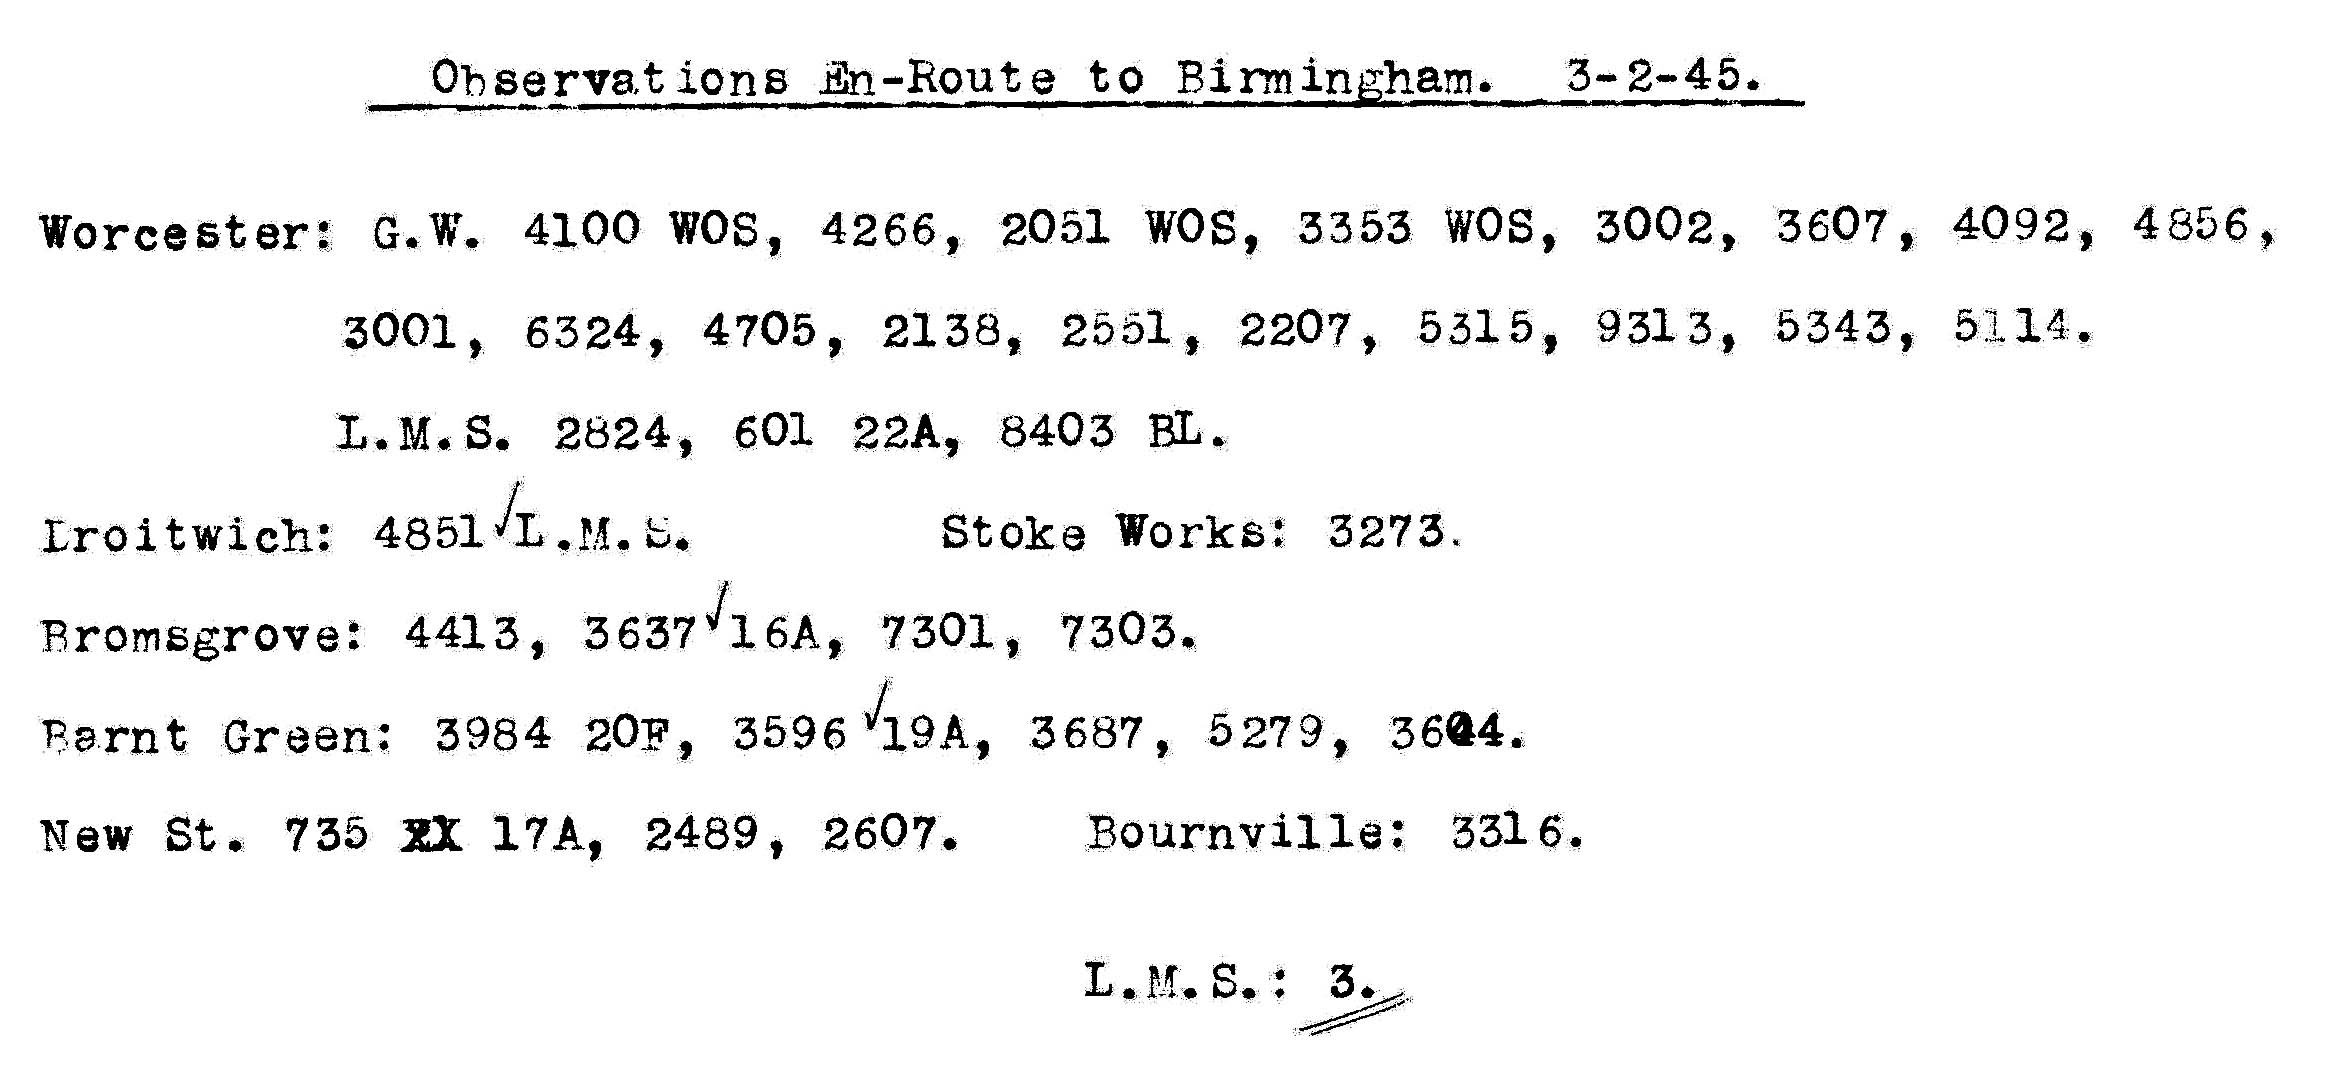 3rd February 1945 - Trip to Birmingham.